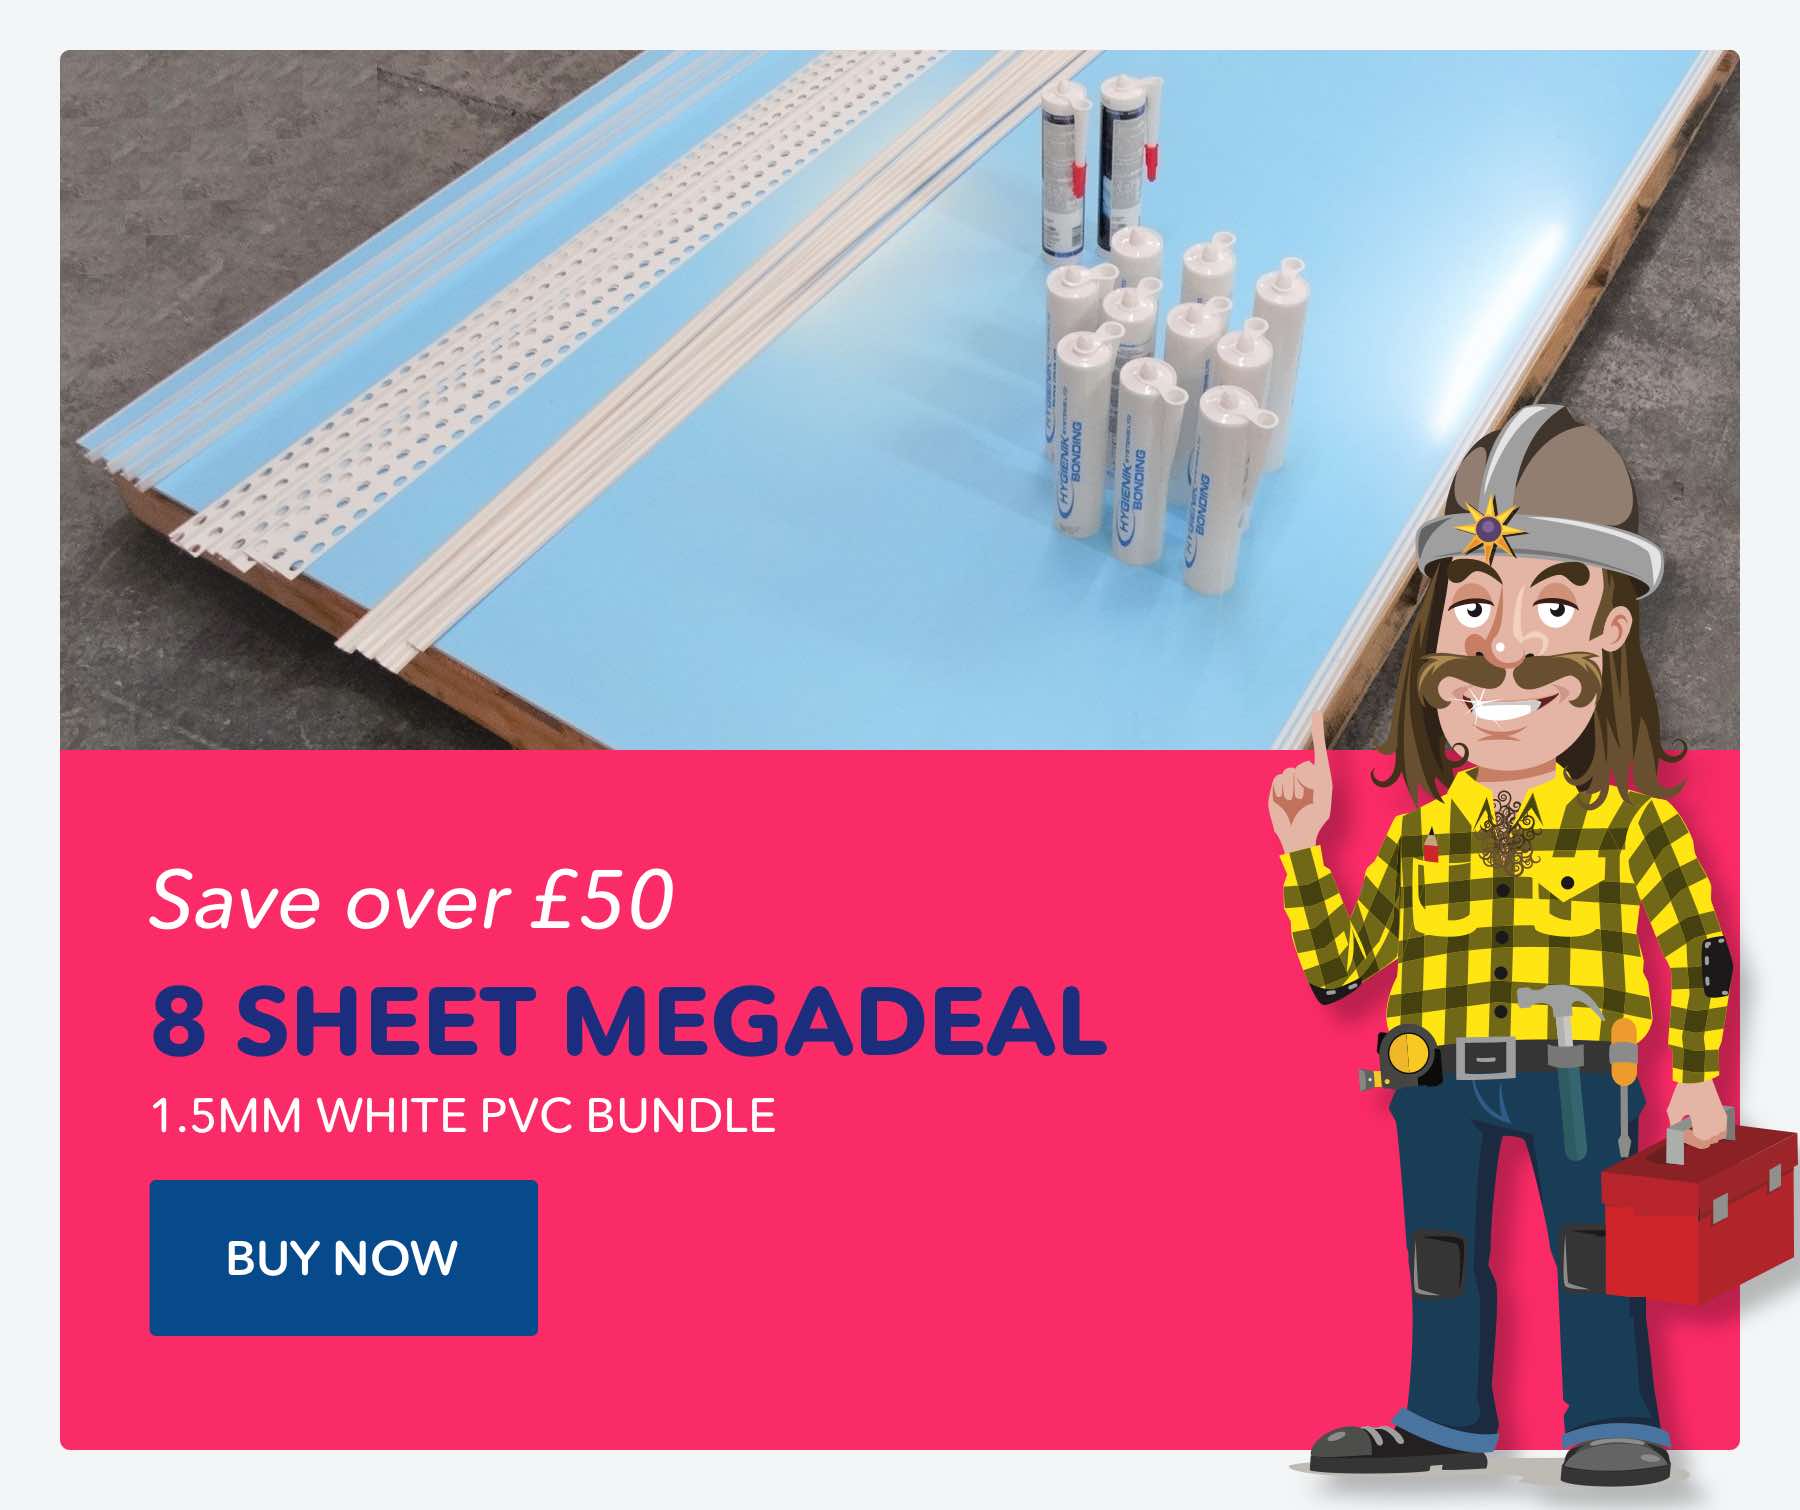 Save over £50. 8 Sheet Megadeal. 1.5mm White PVC Bundle.